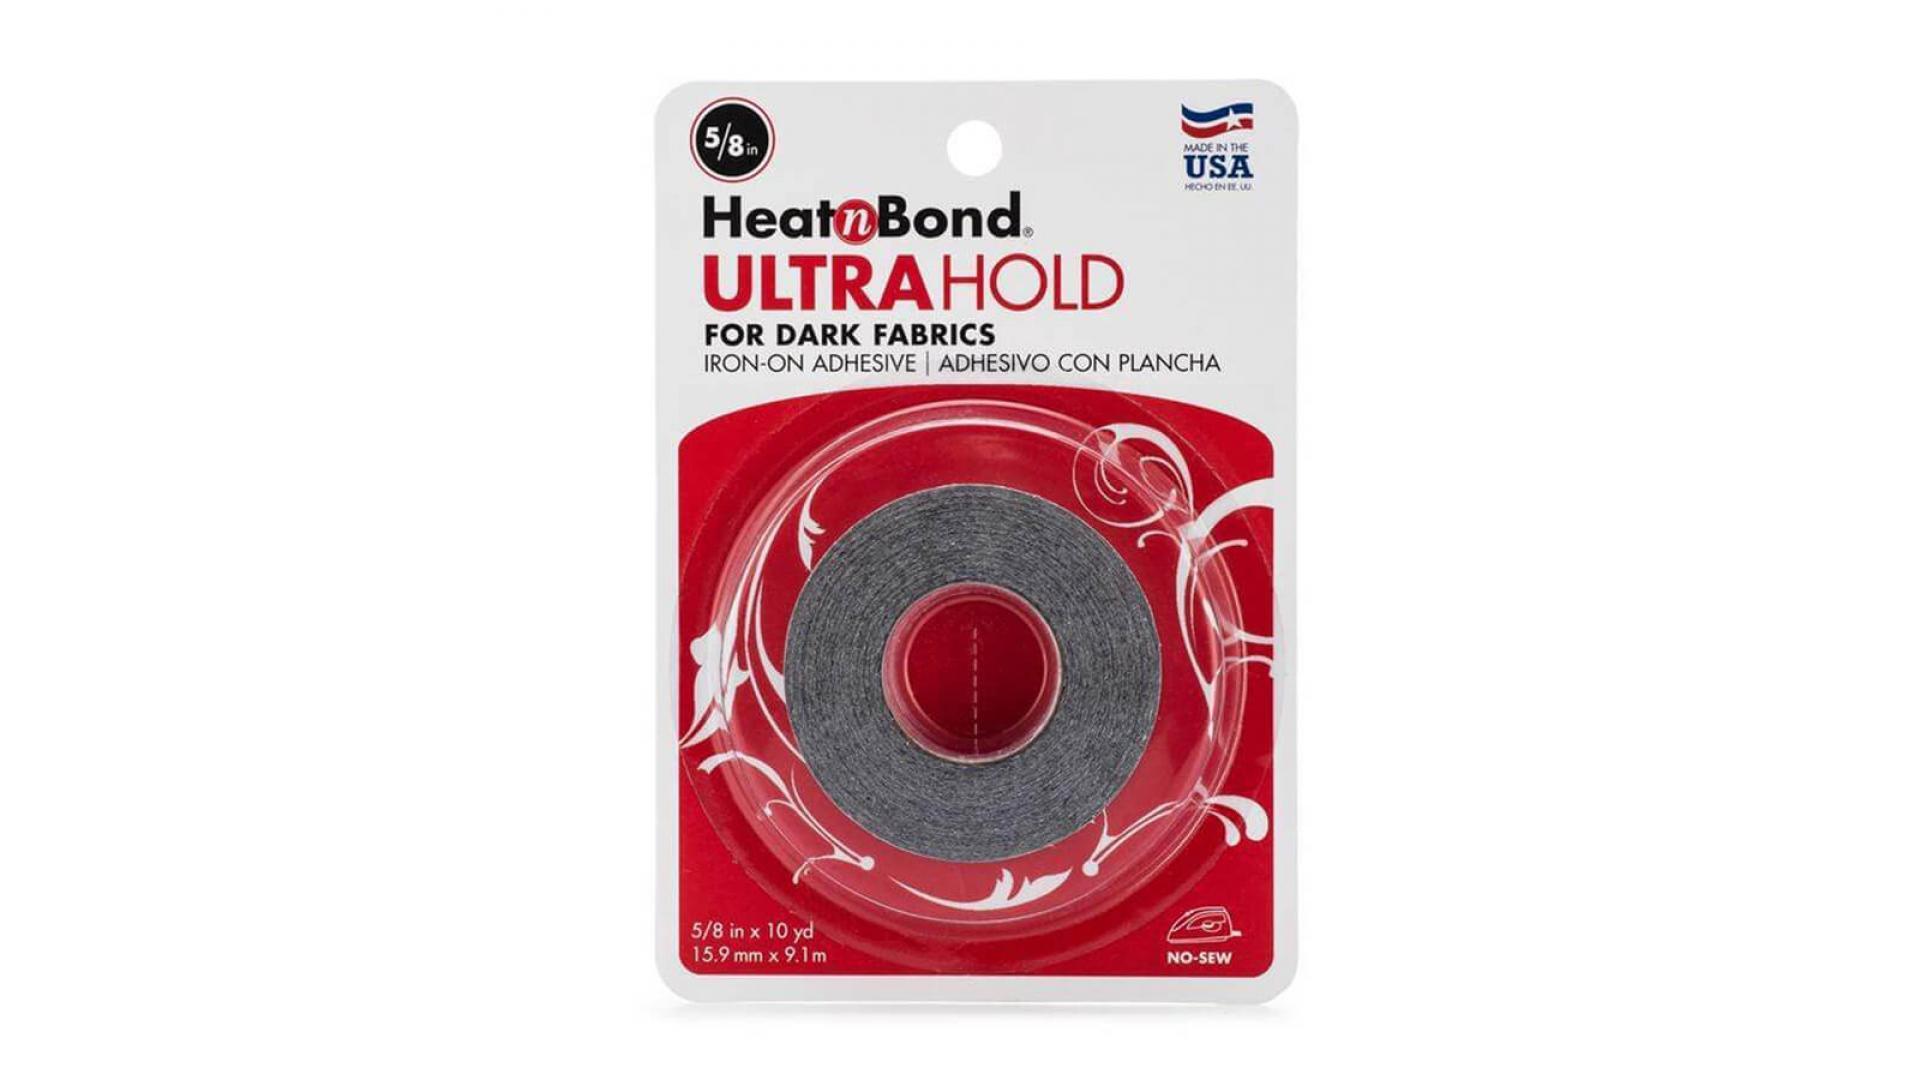 HeatnBond UltraHold Iron-On Adhesive 5/8x10yd, For Dark Fabrics (3510.58)